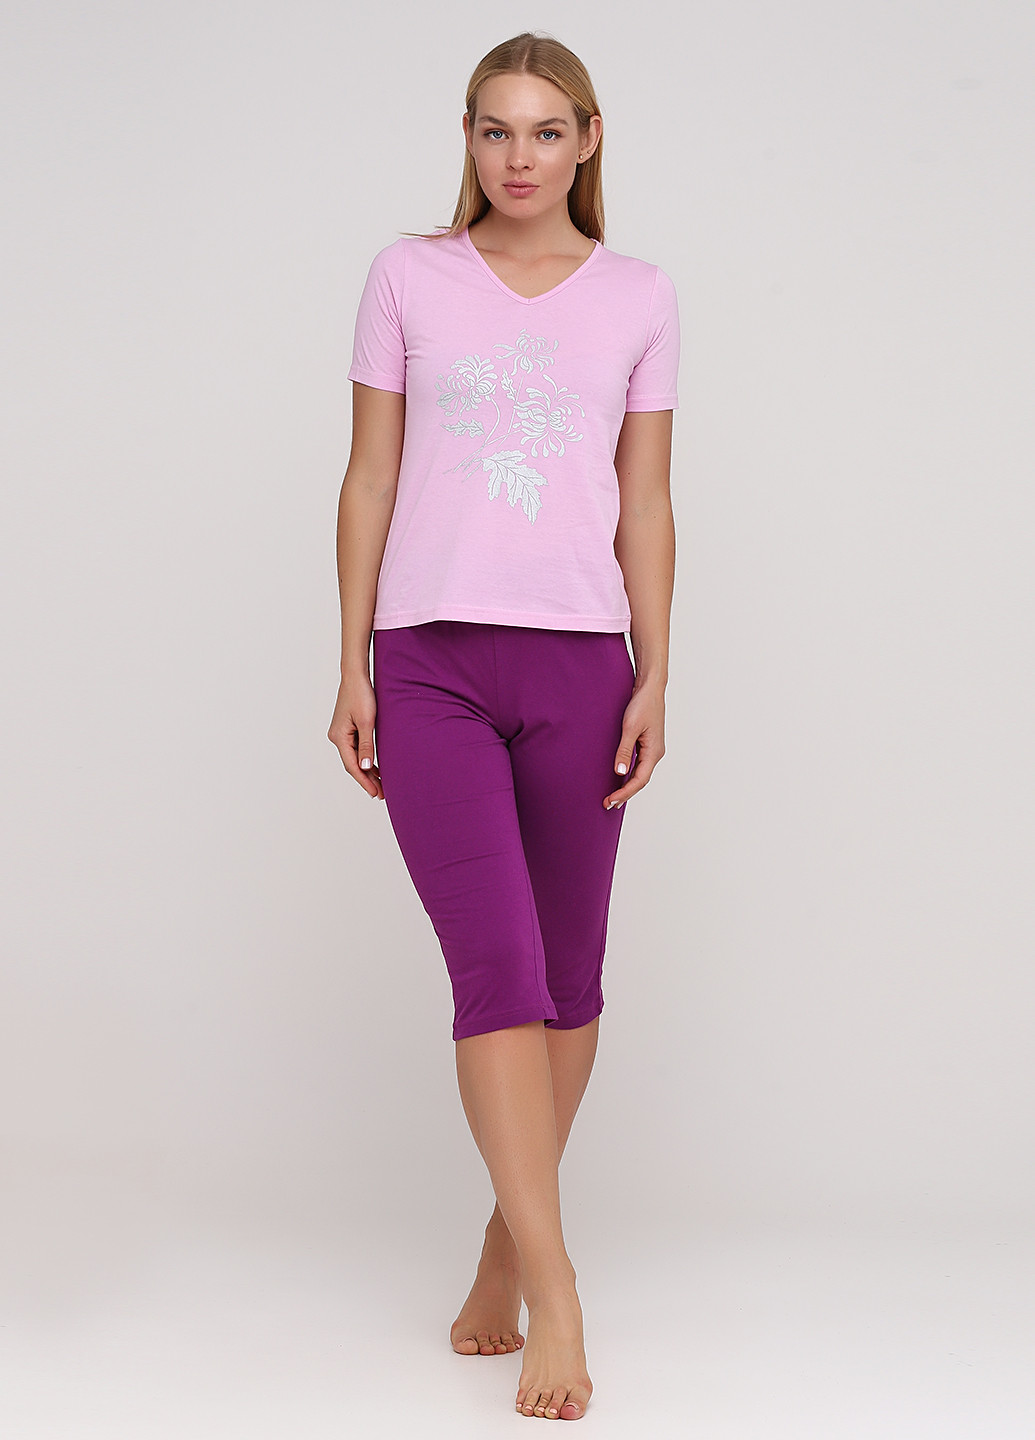 Лілова всесезон піжама (футболка, бриджі) футболка+ бриджі Aniele